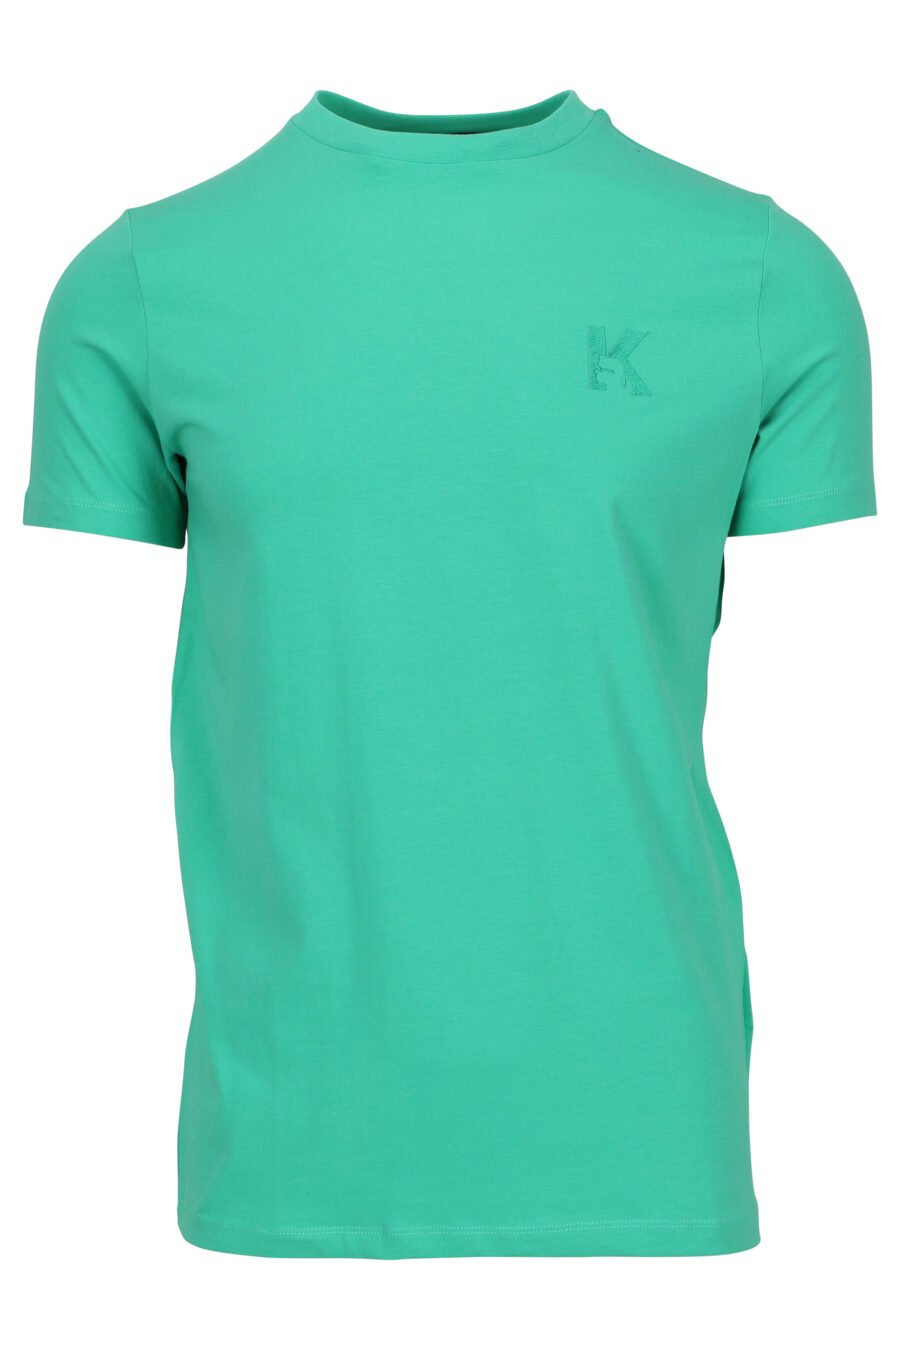 Camiseta verde con minilogo - 4062226789752